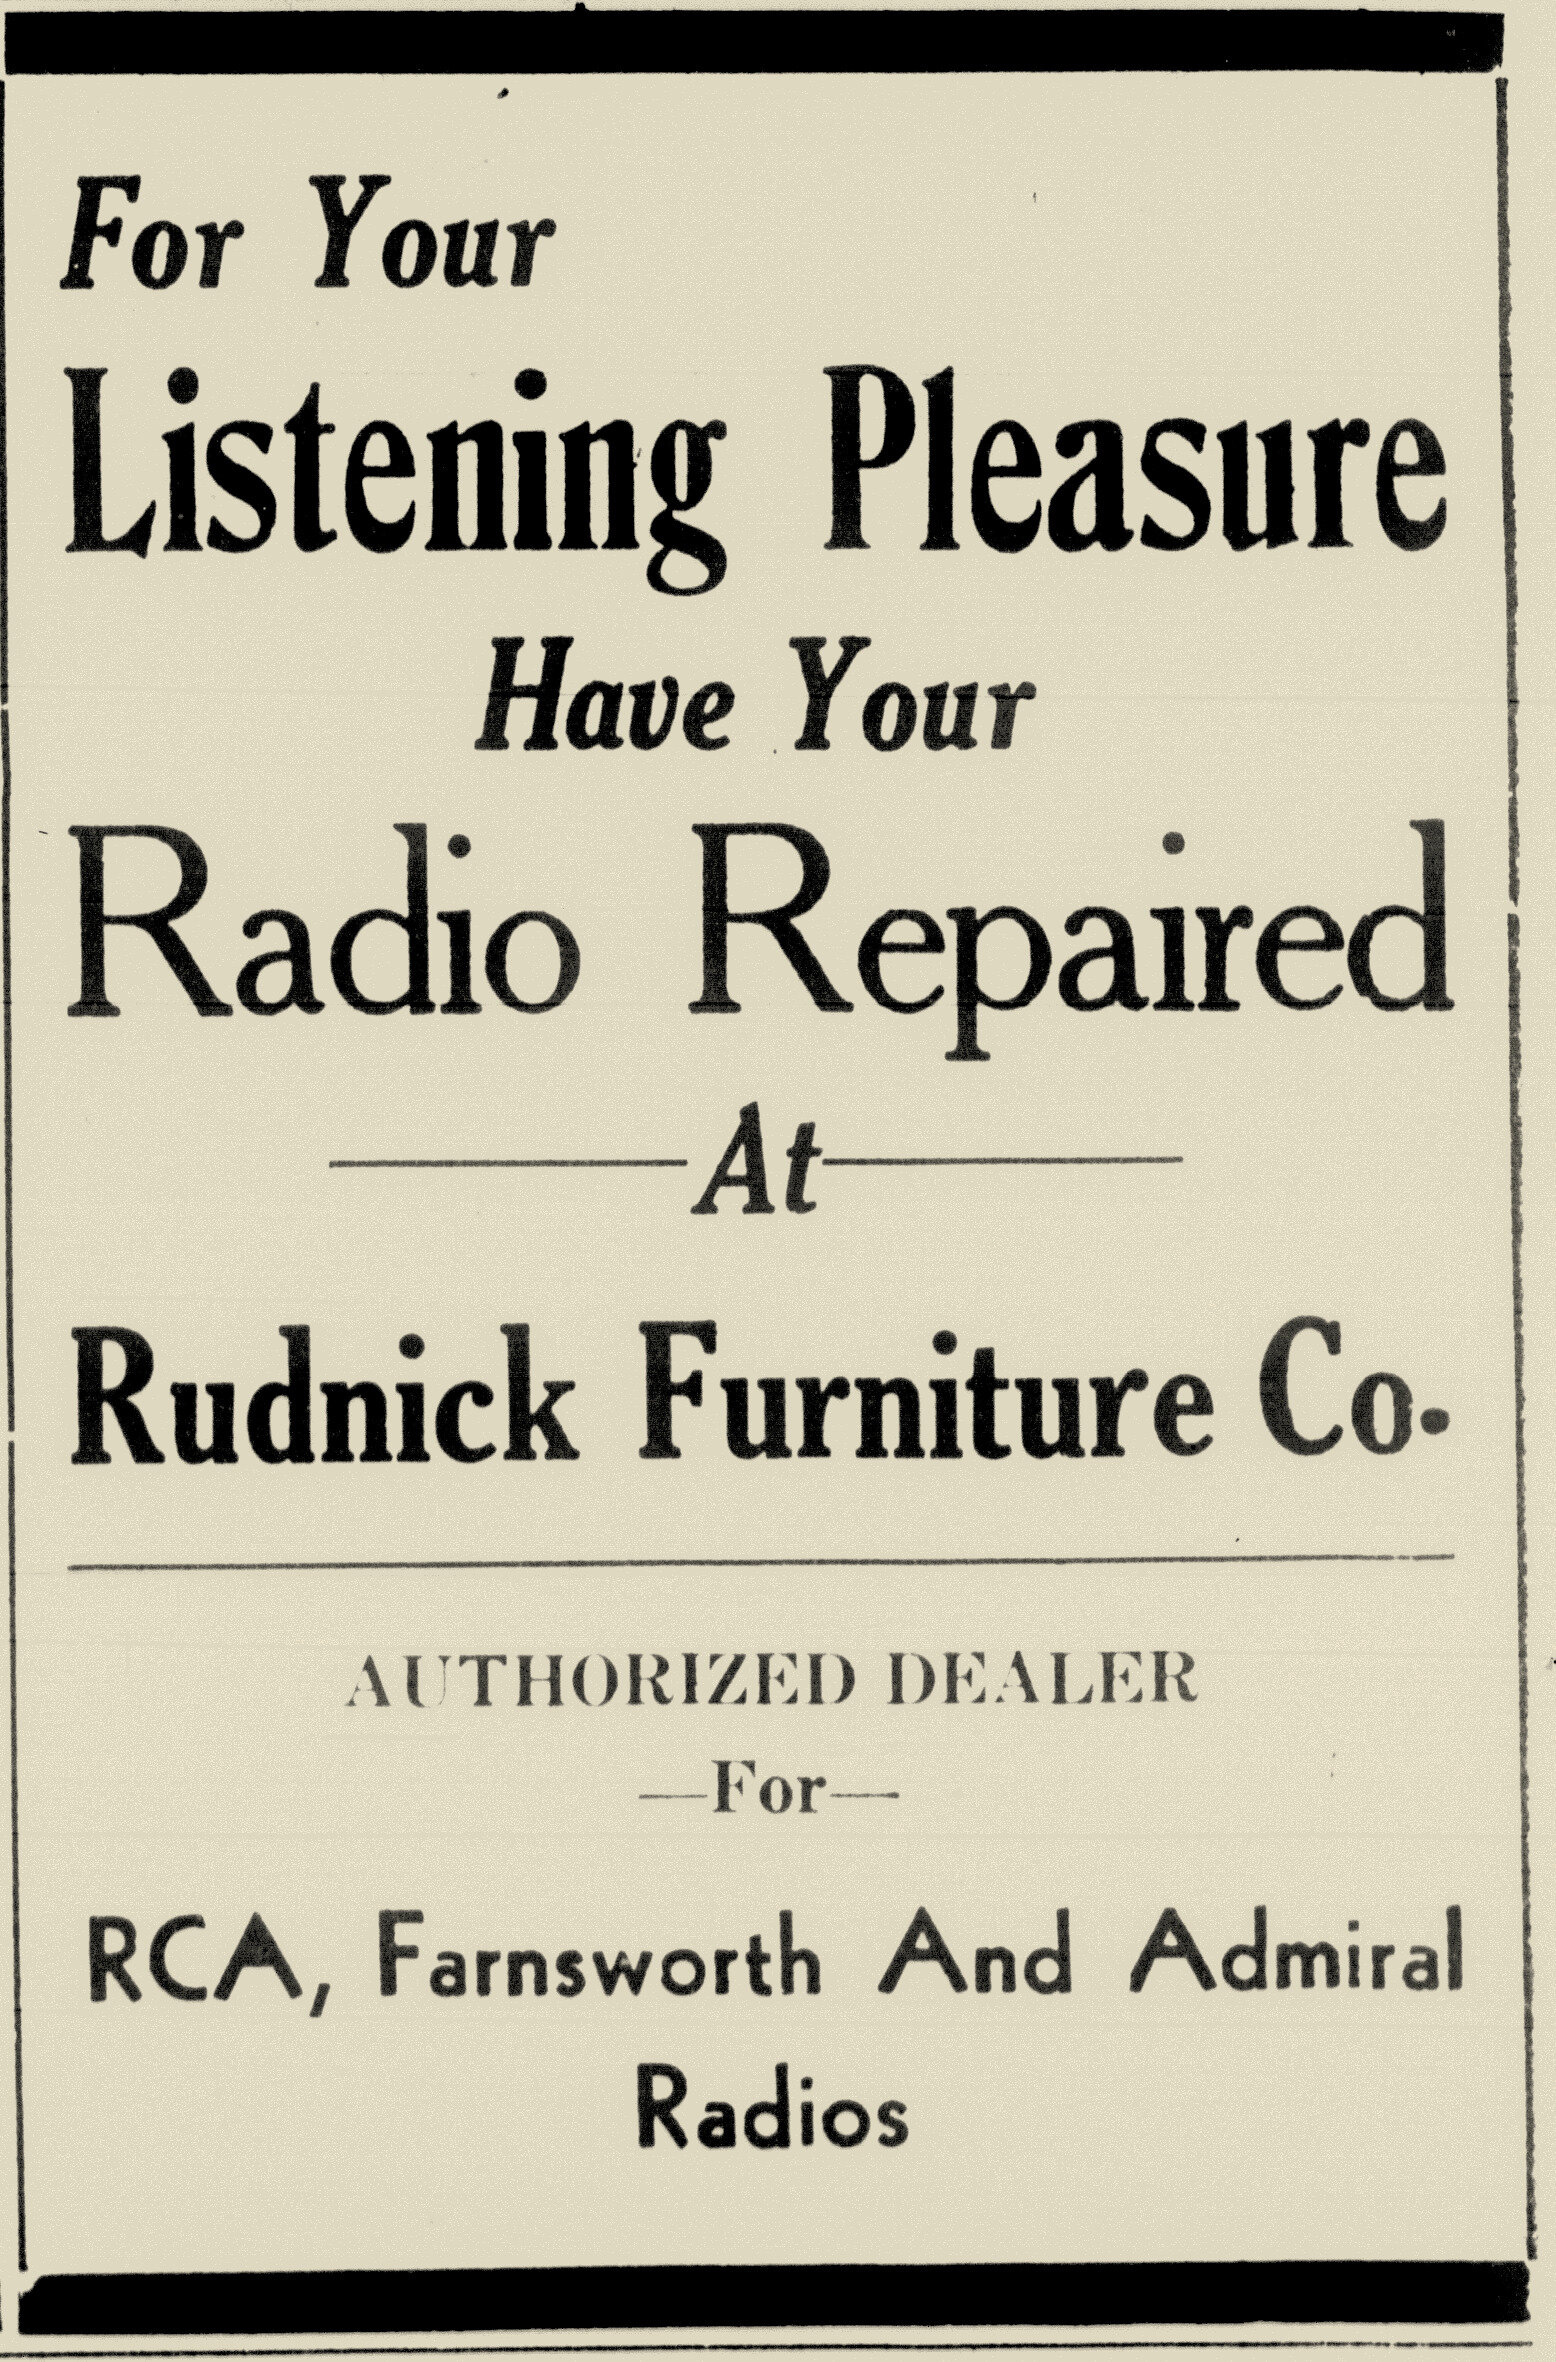 Rudnick Furnithre Ad, Aiken Standard and Review, 7-23-47.jpg